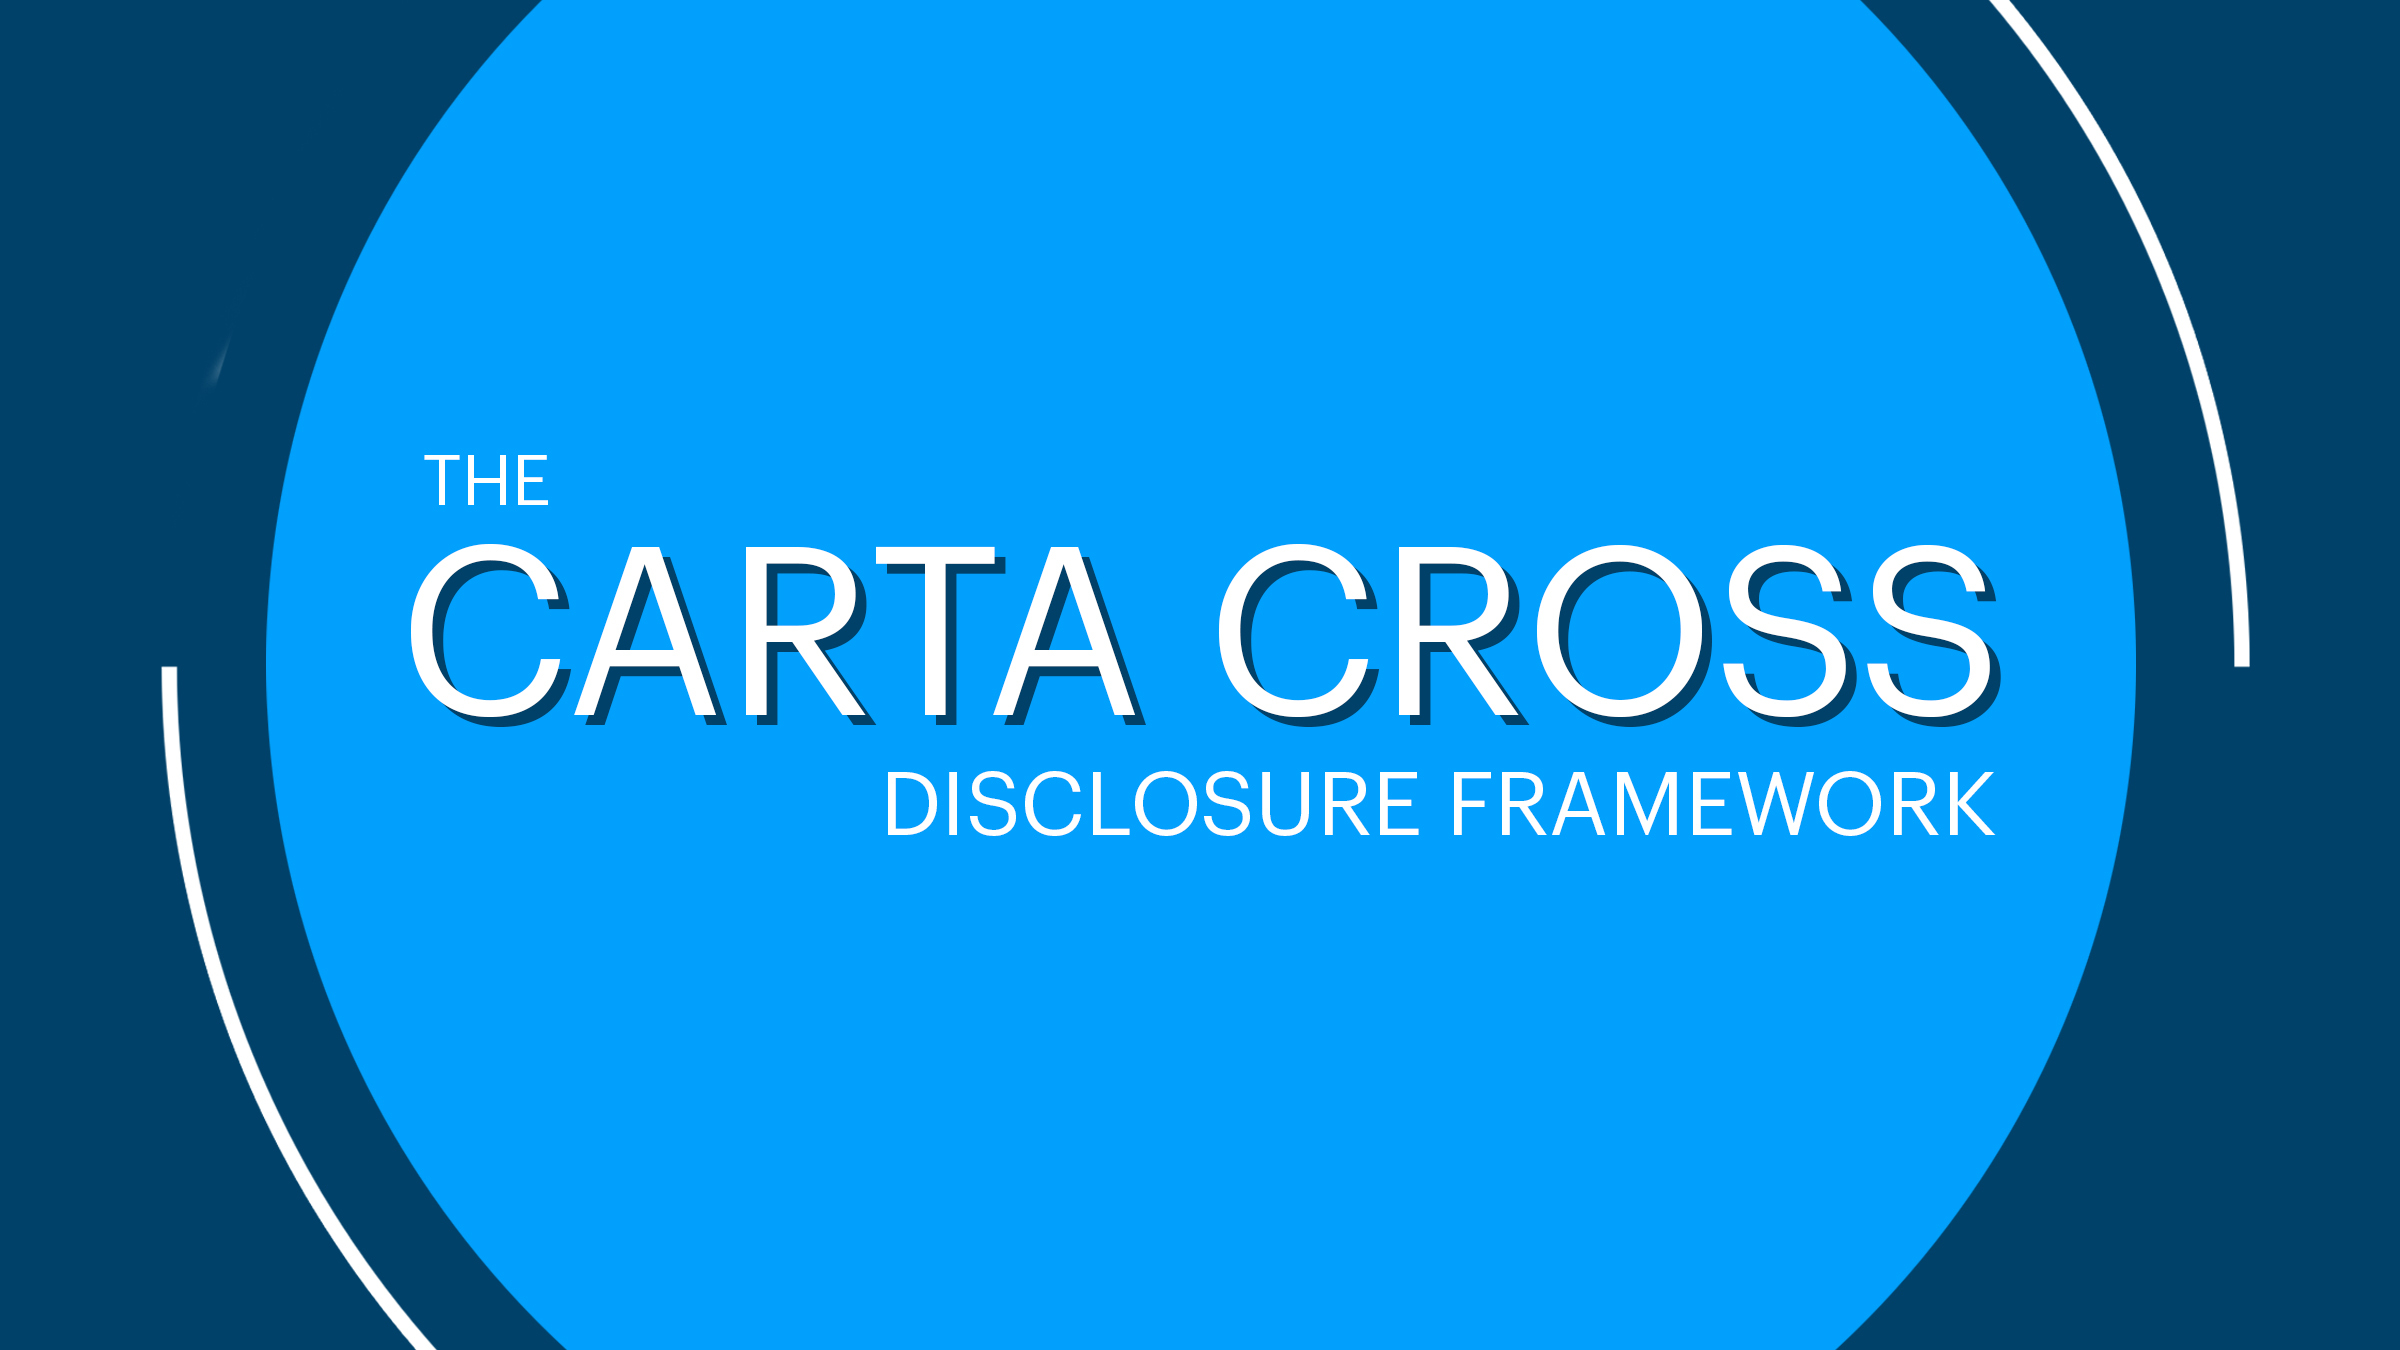 The Carta Cross disclosure framework